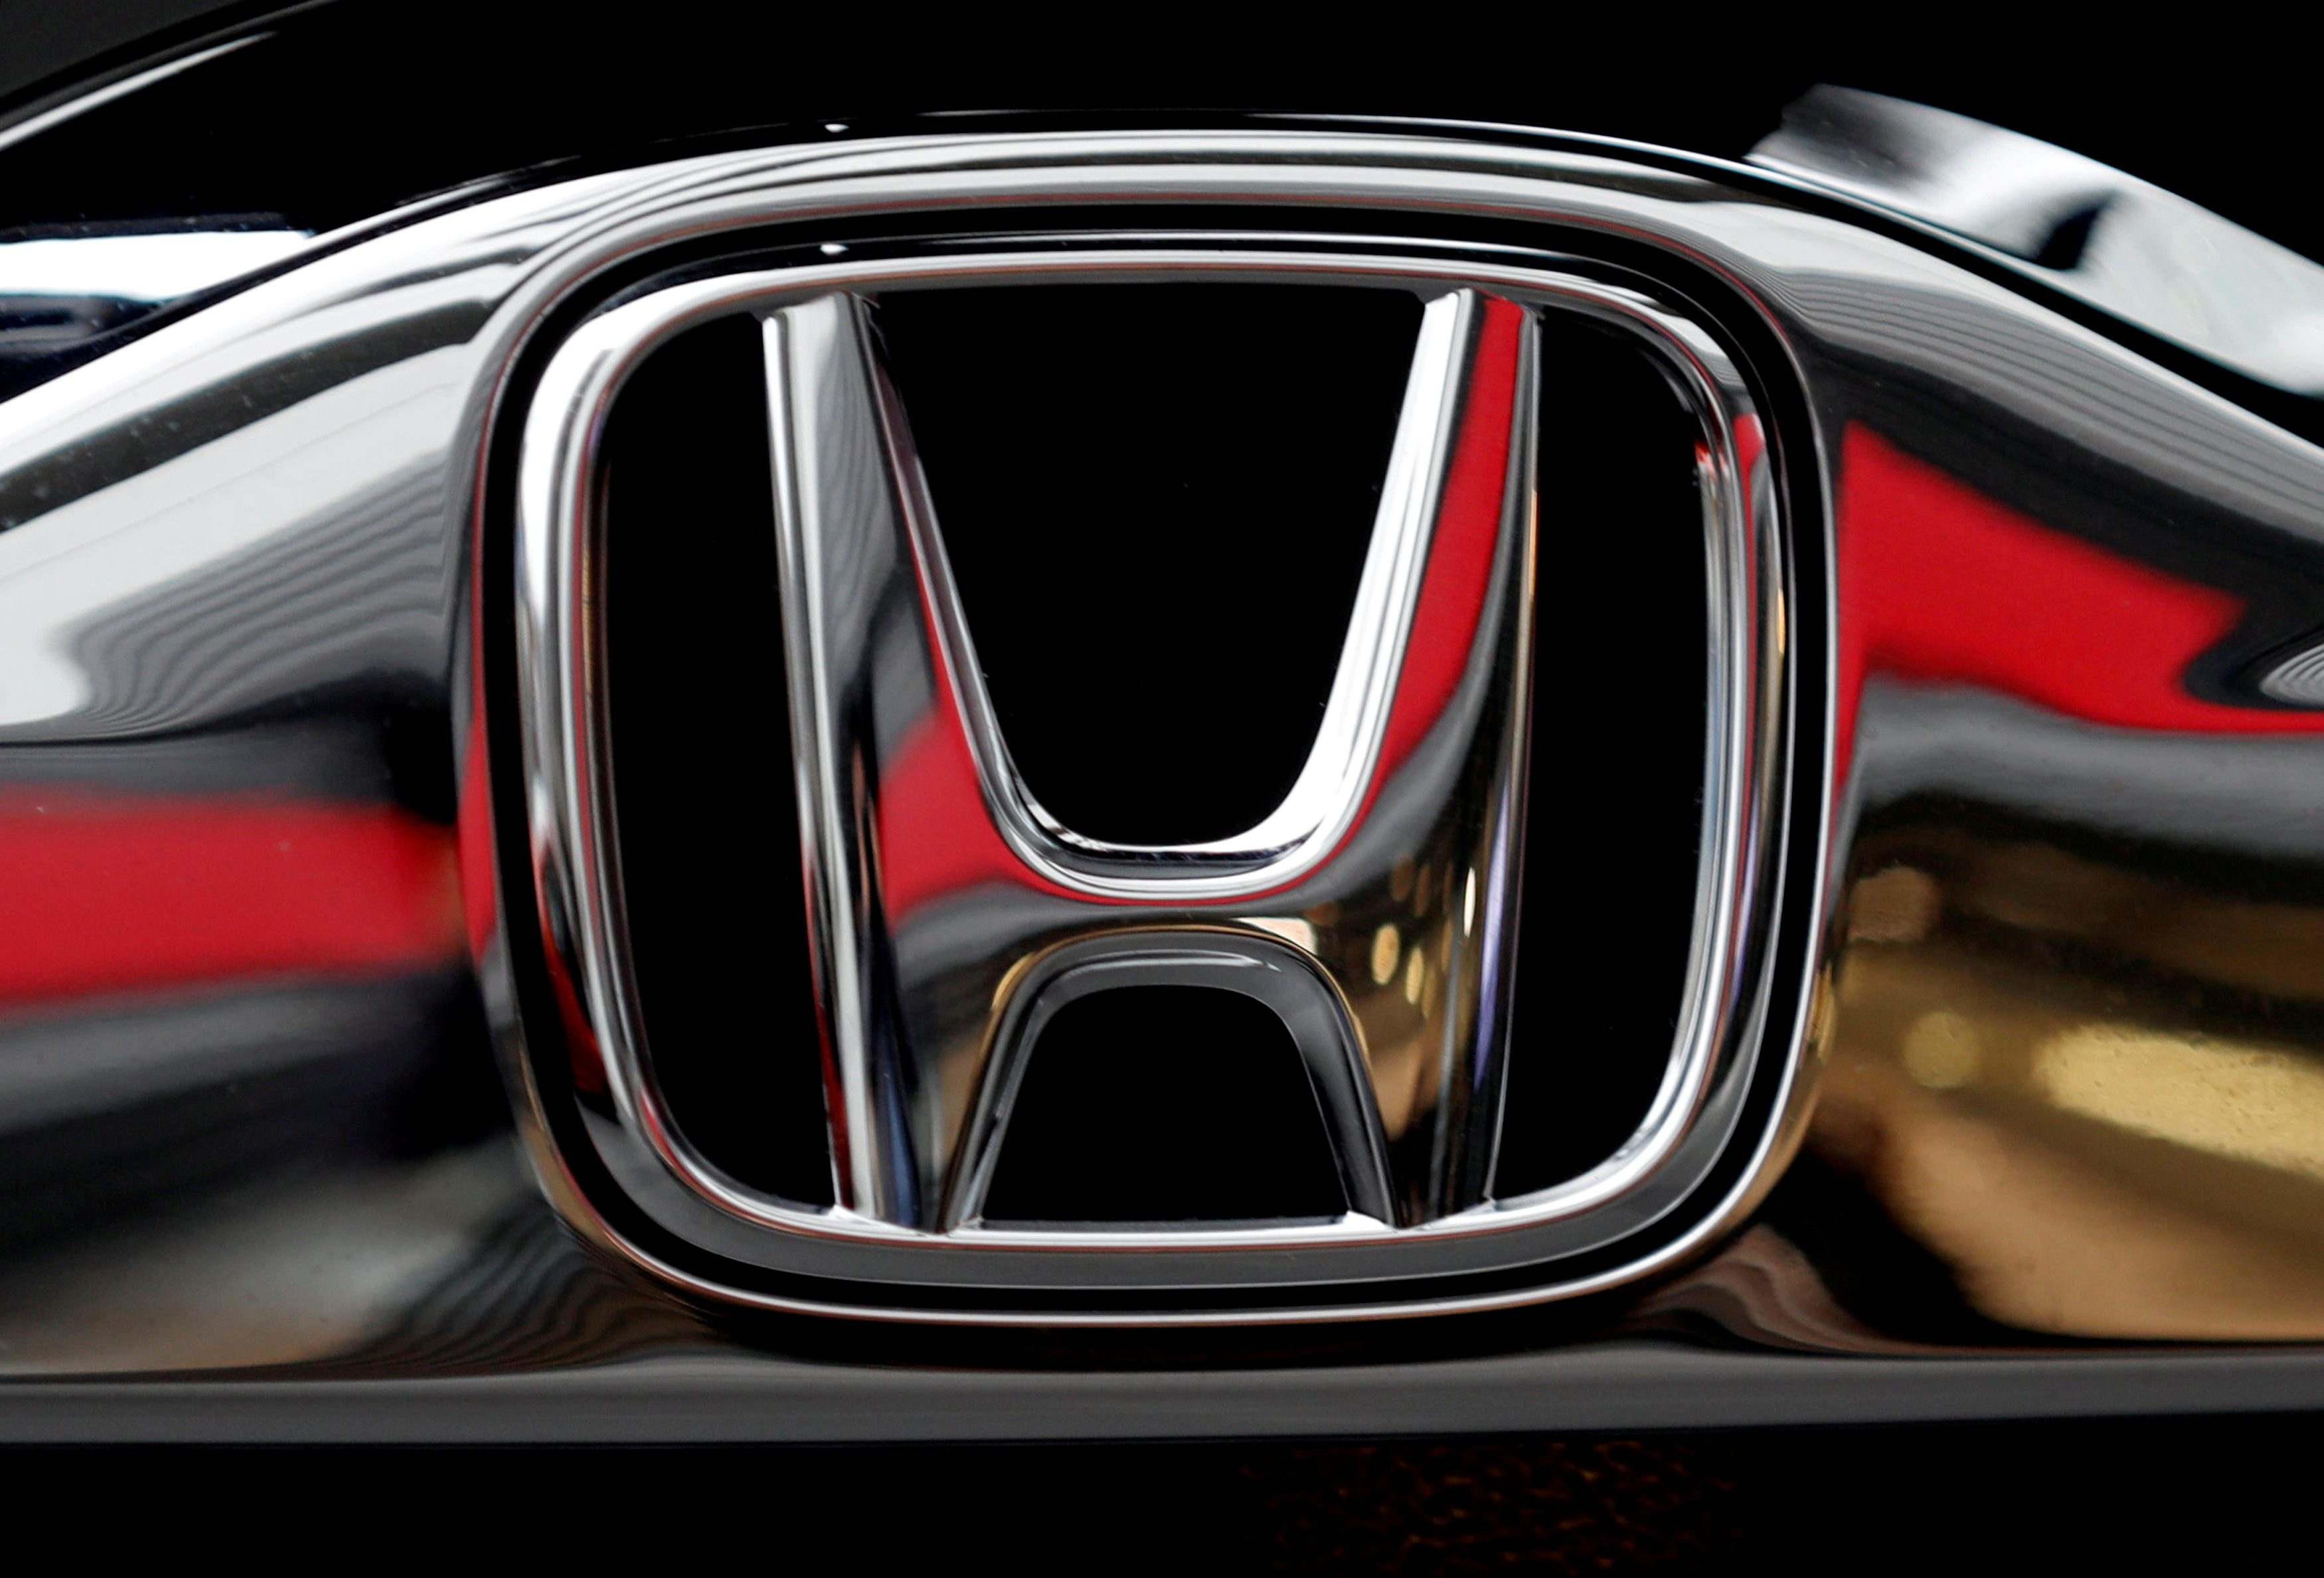 US opens safety probe into 1.1 million Honda Accord vehicles